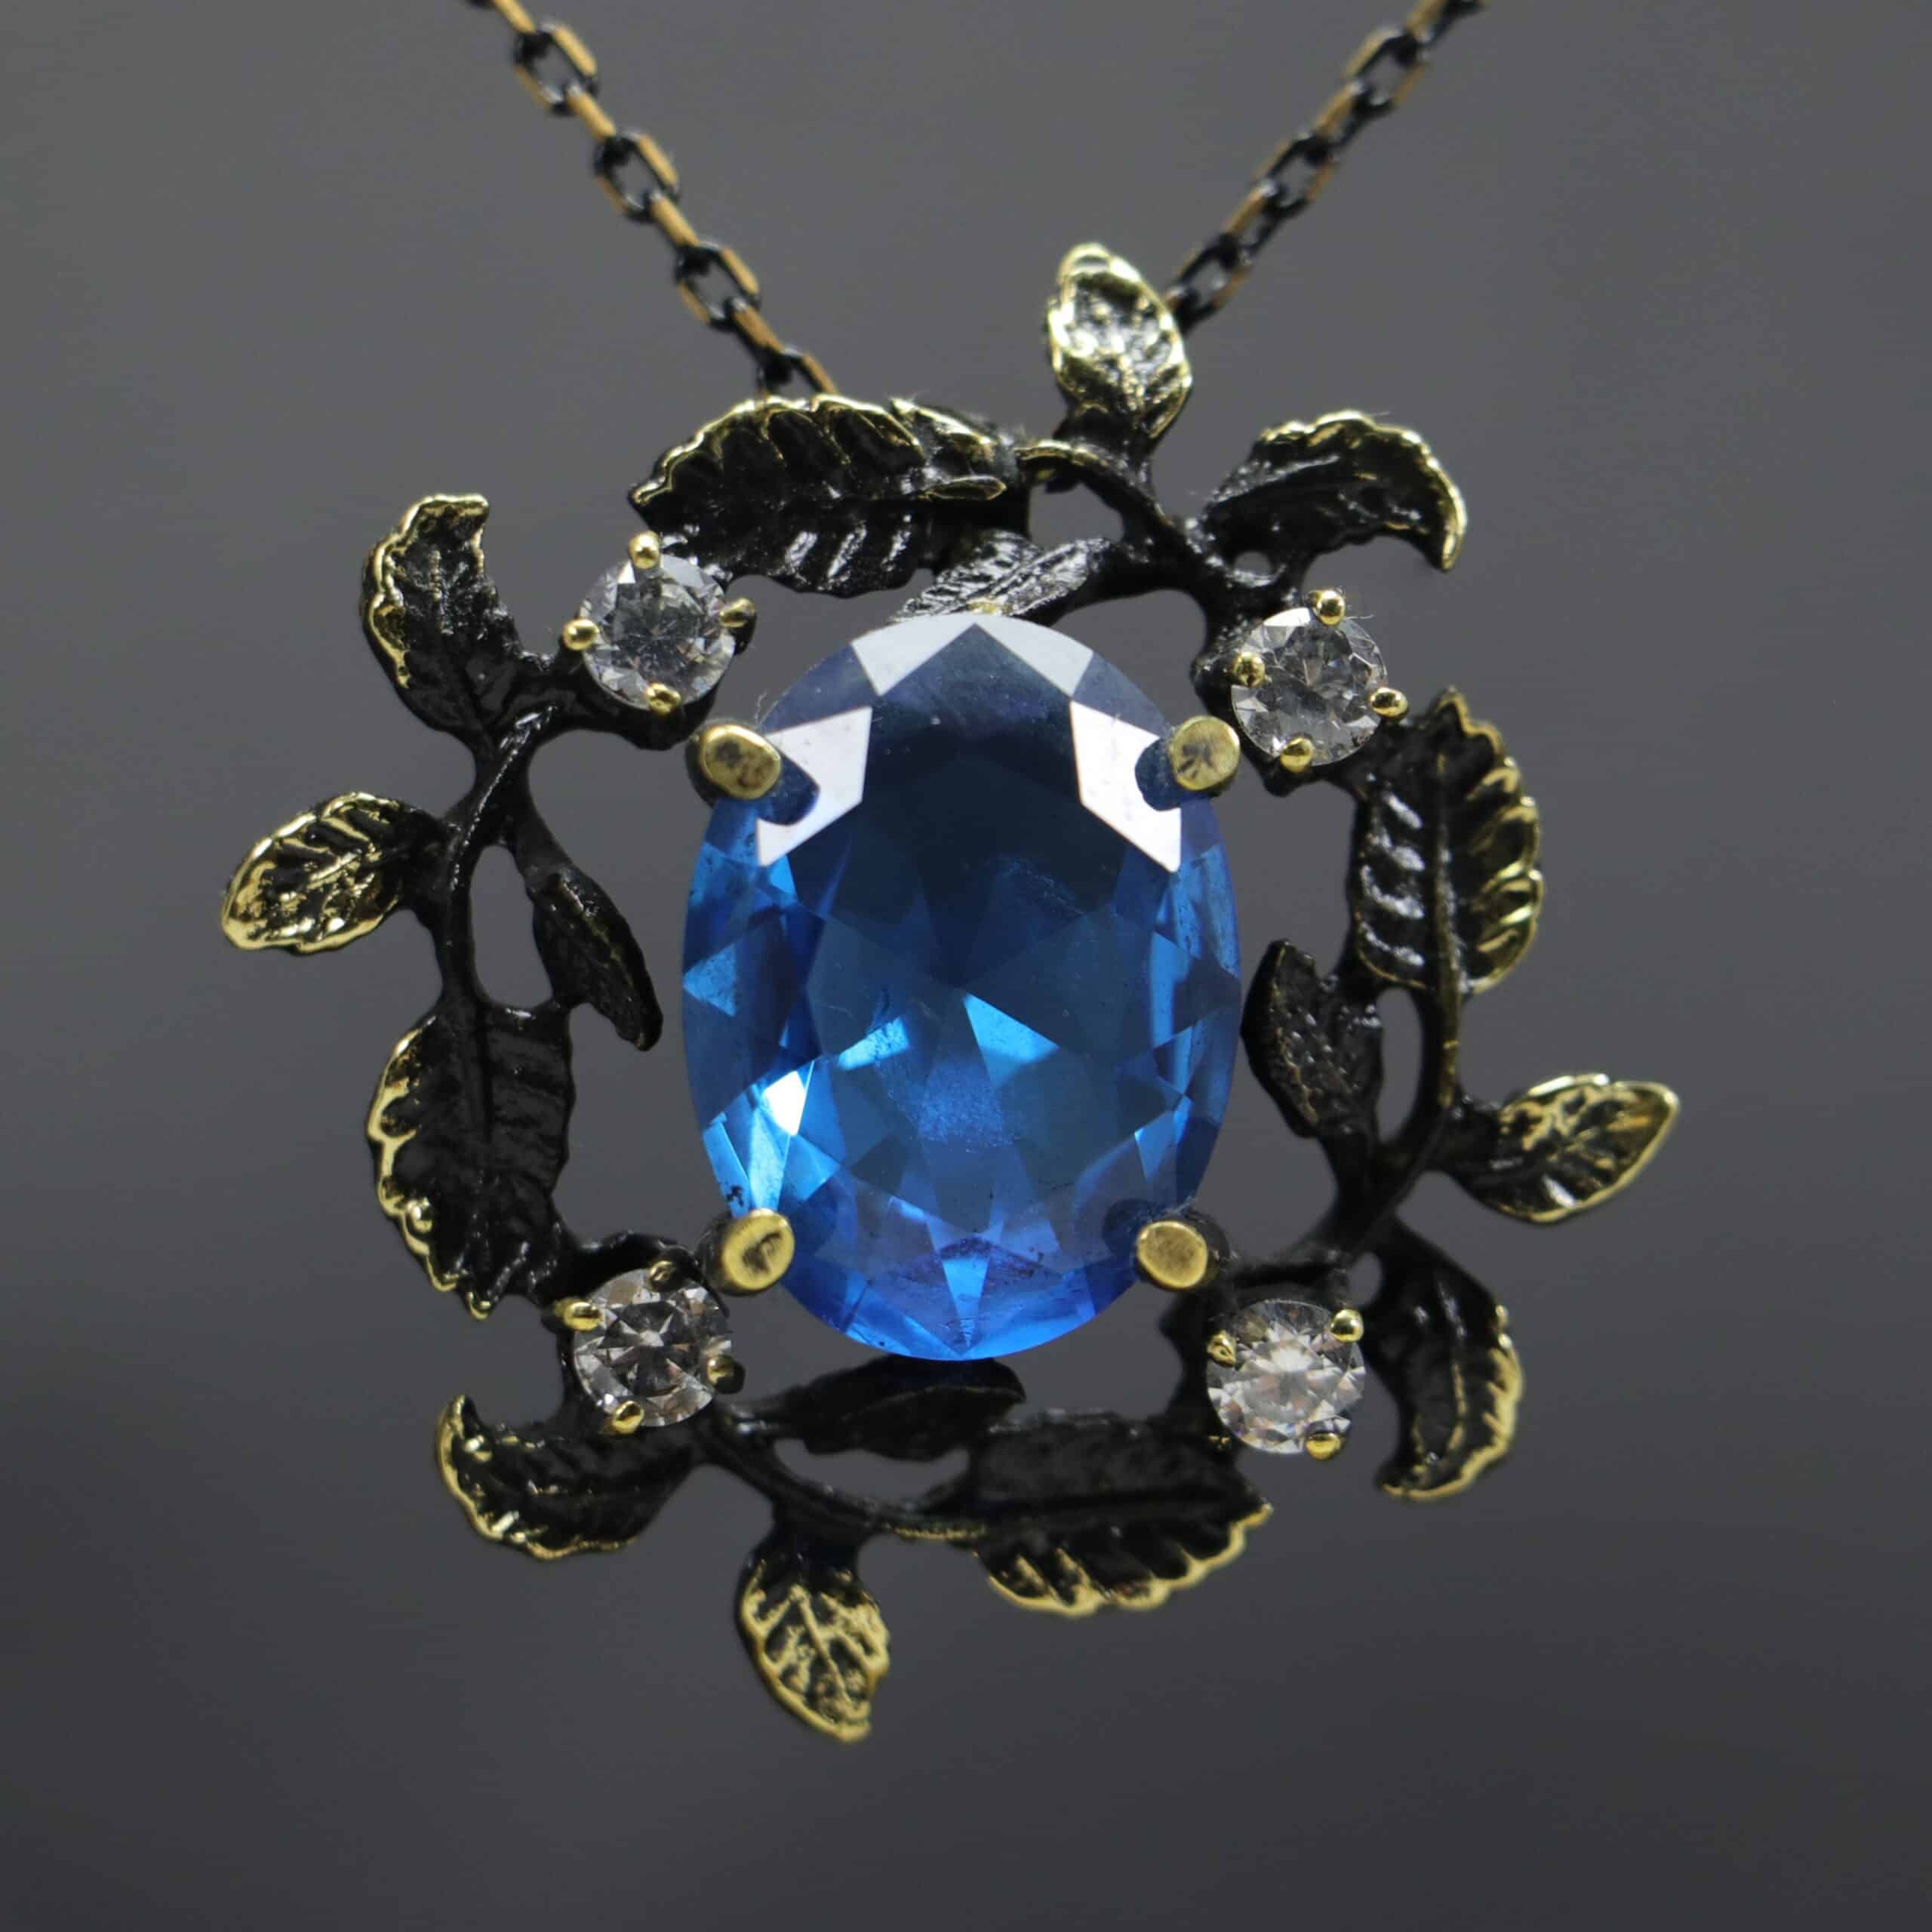 Aquamarine and Swarovski Leaves Necklace